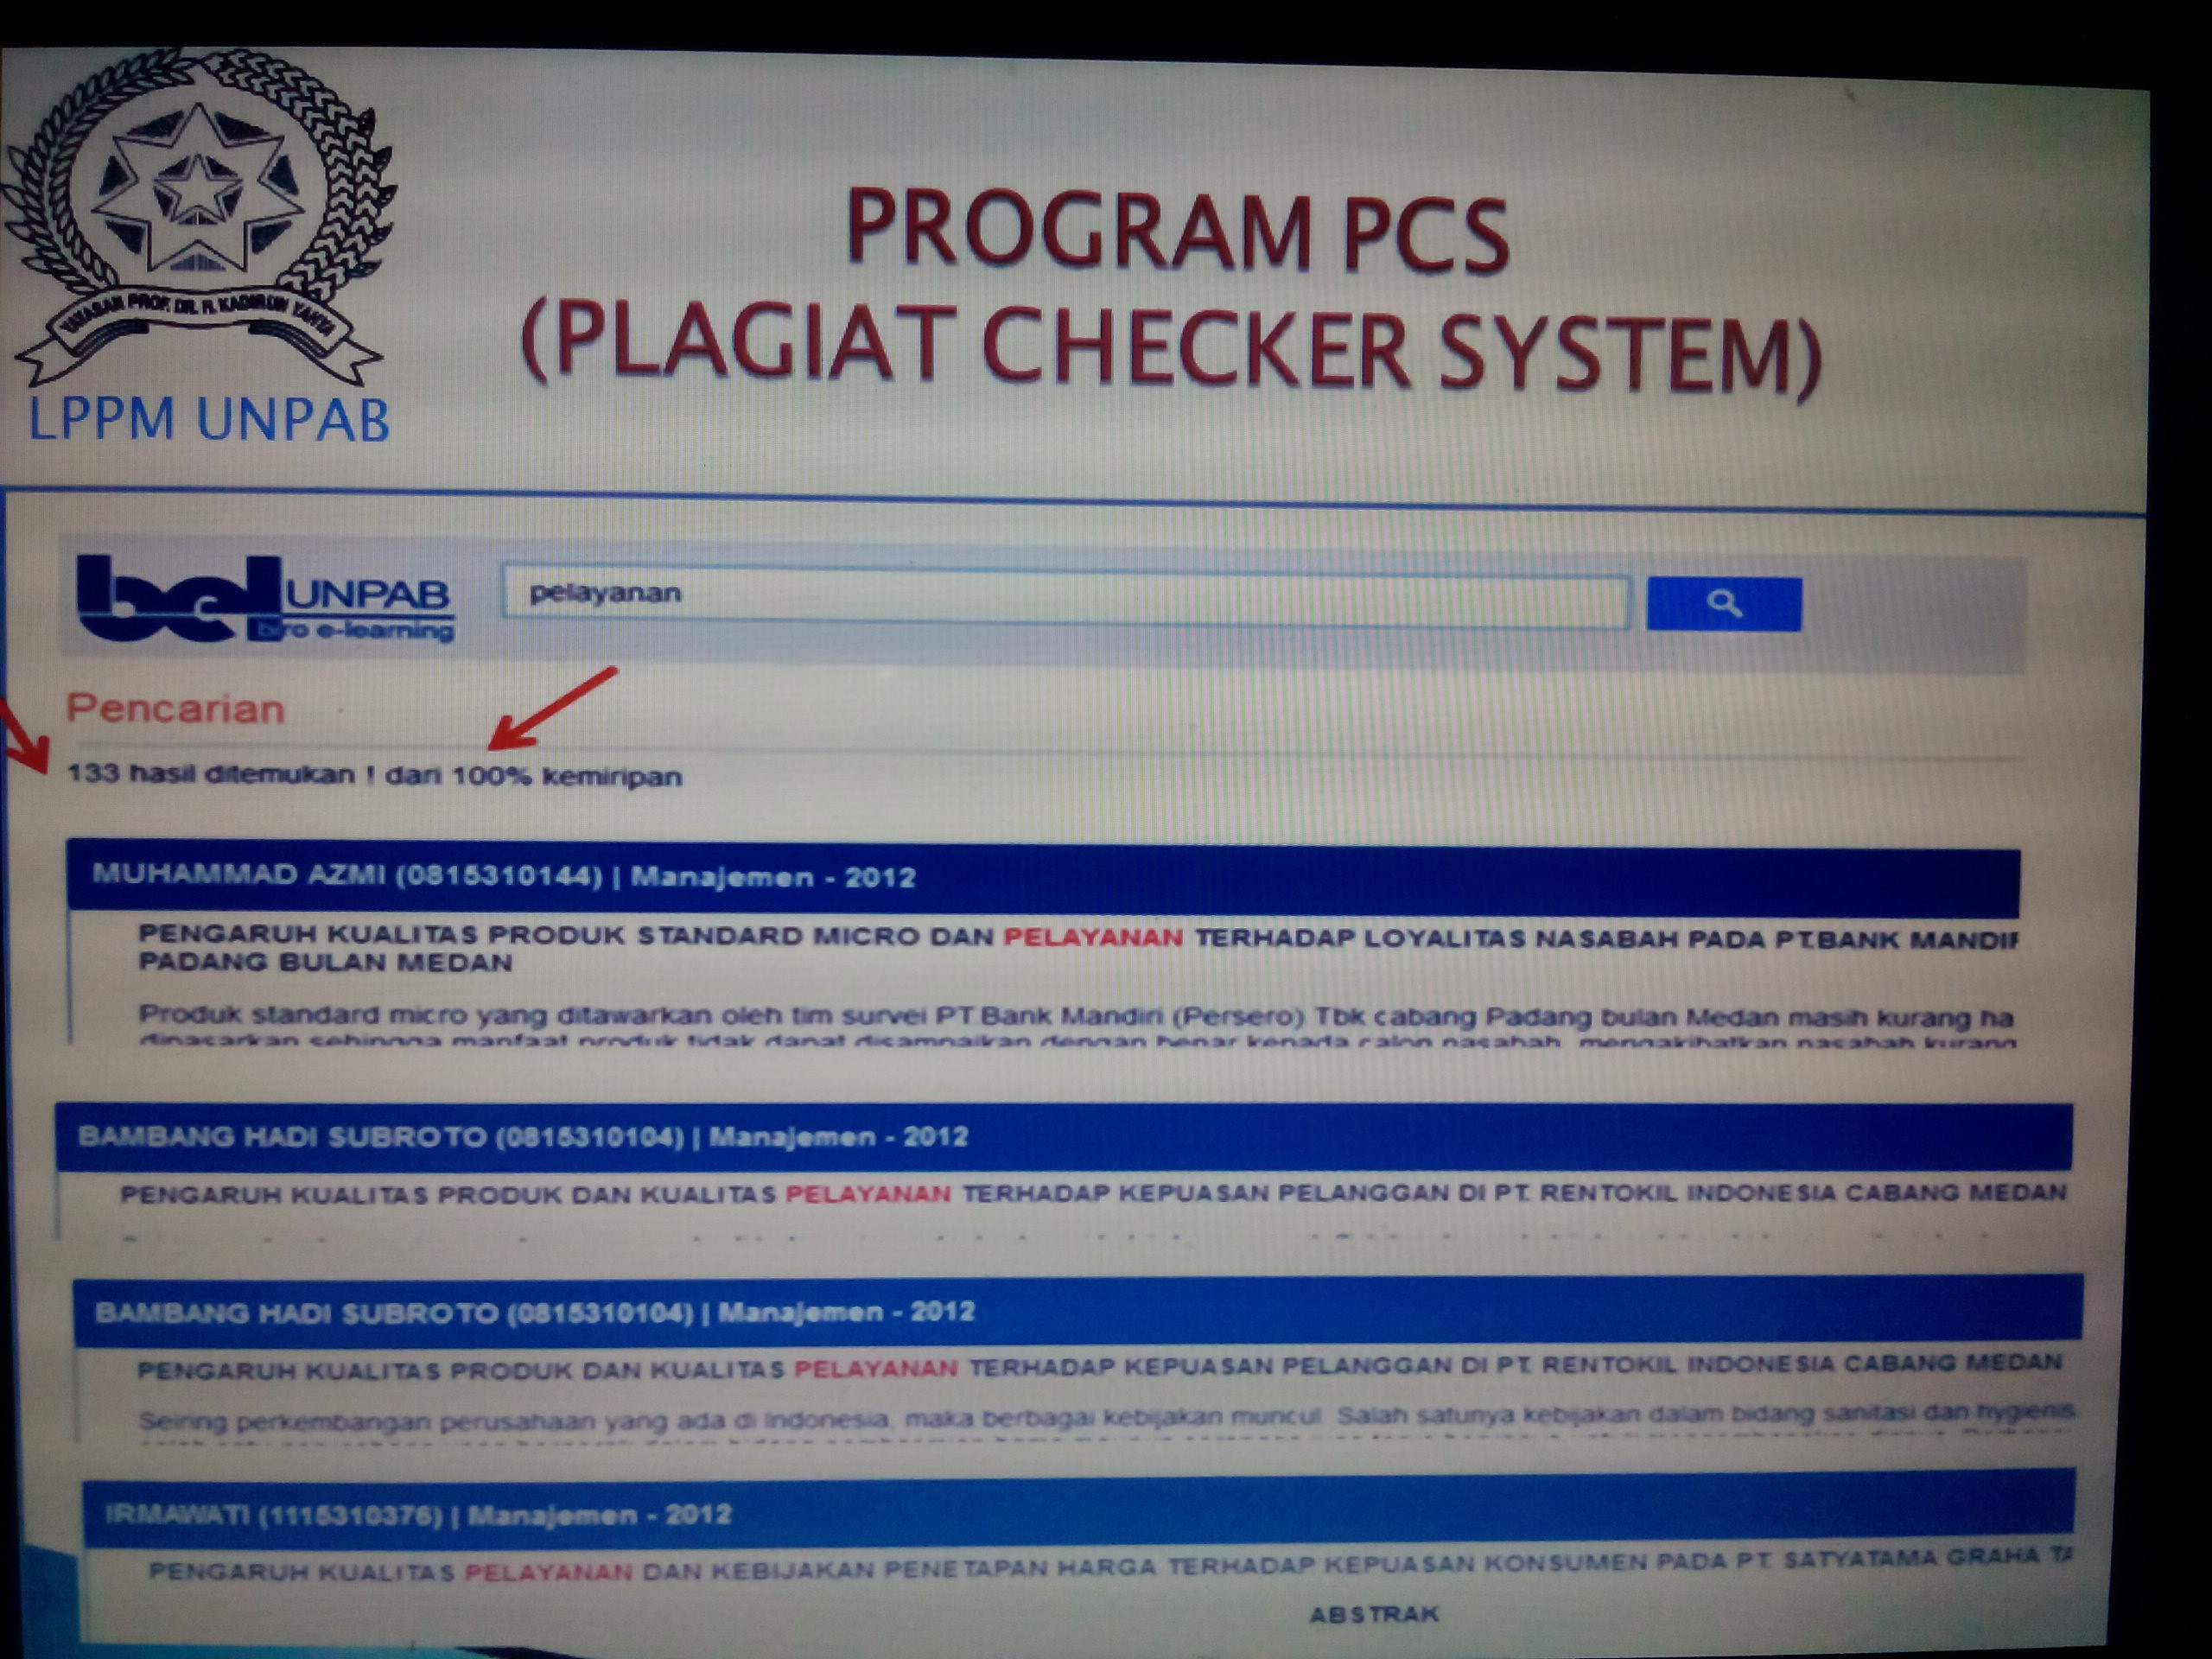 lppm-unpab-dan-elearning-membuat-program-plagiat-checker-system-pcs_94.jpg